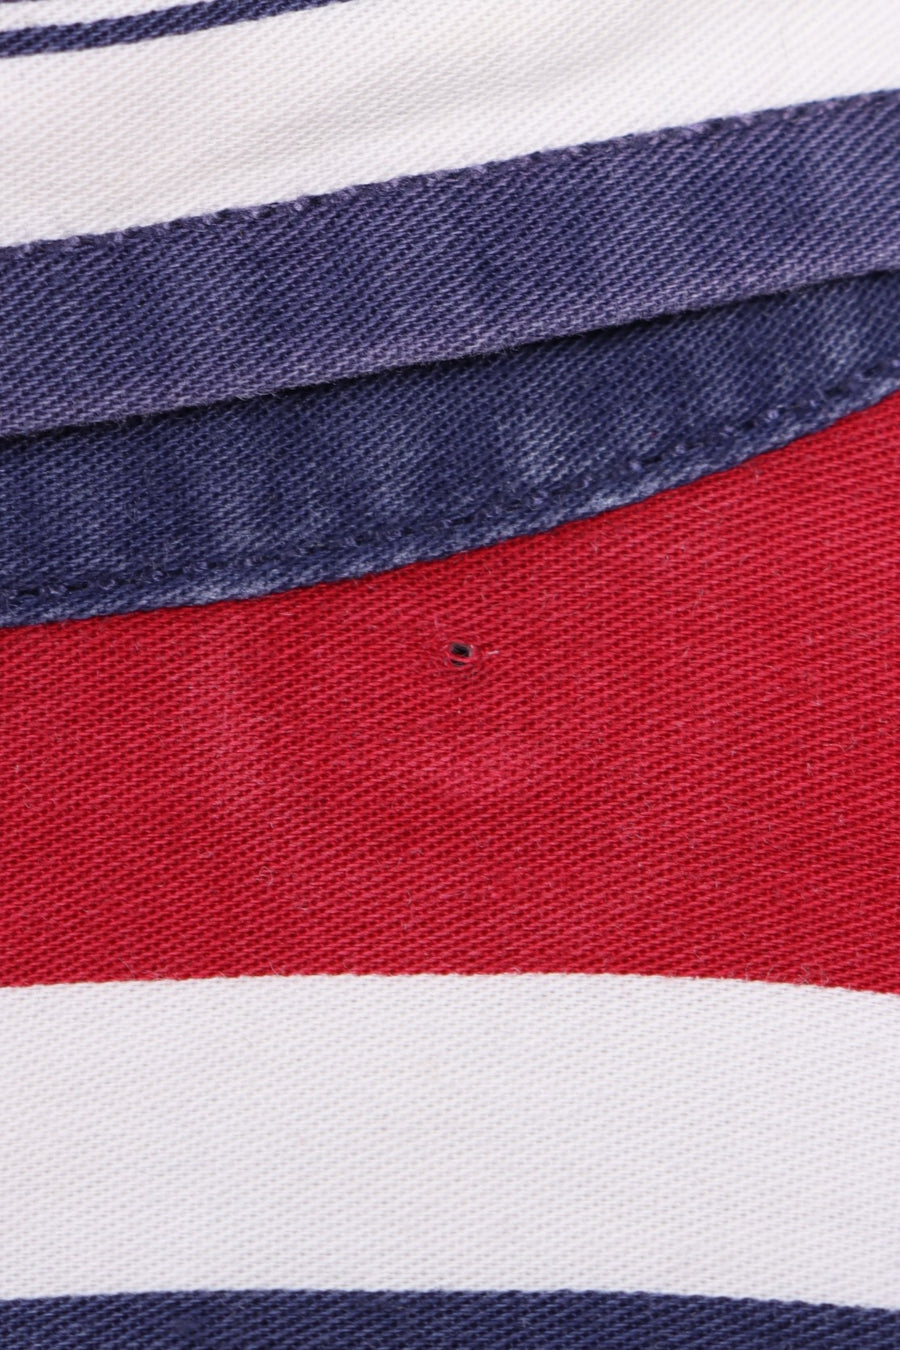 NAUTICA Blue White & Red Stripe Button Down Shirt (XL)